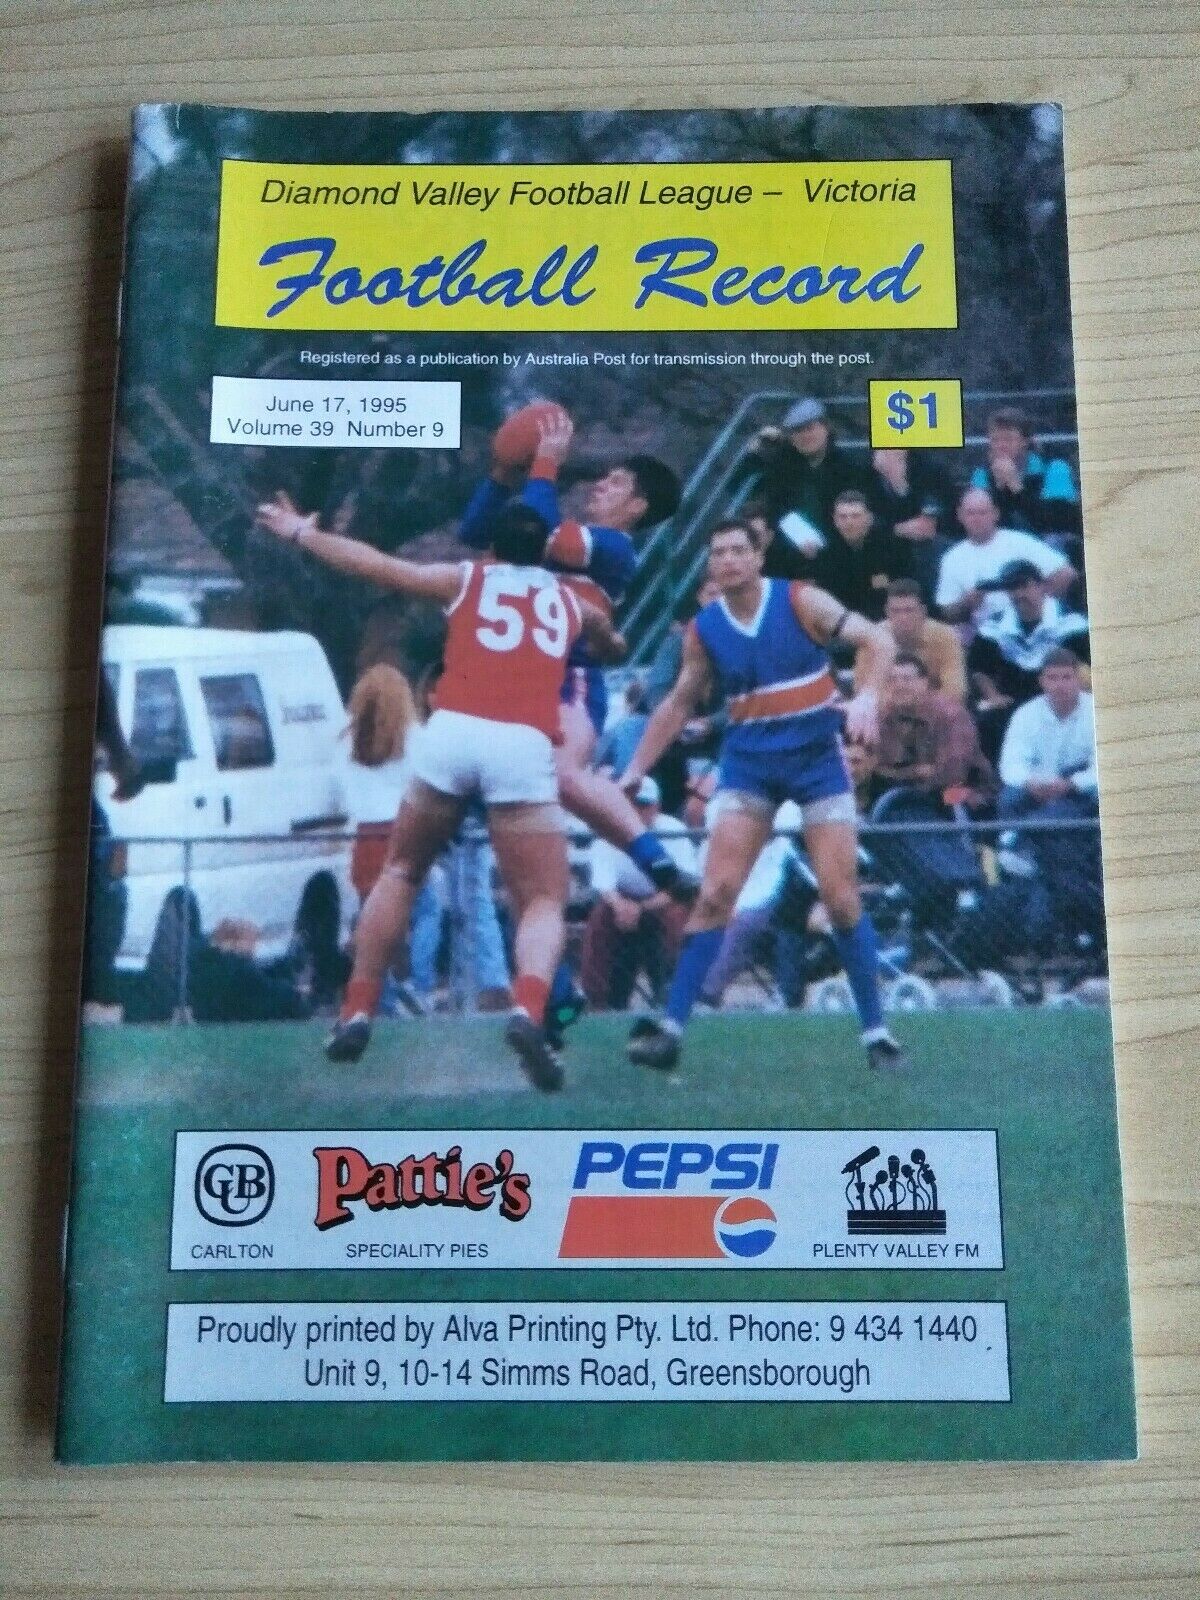 Football 1995 17th June Diamond Valley Football League Football Record Vol. 39, No. 9